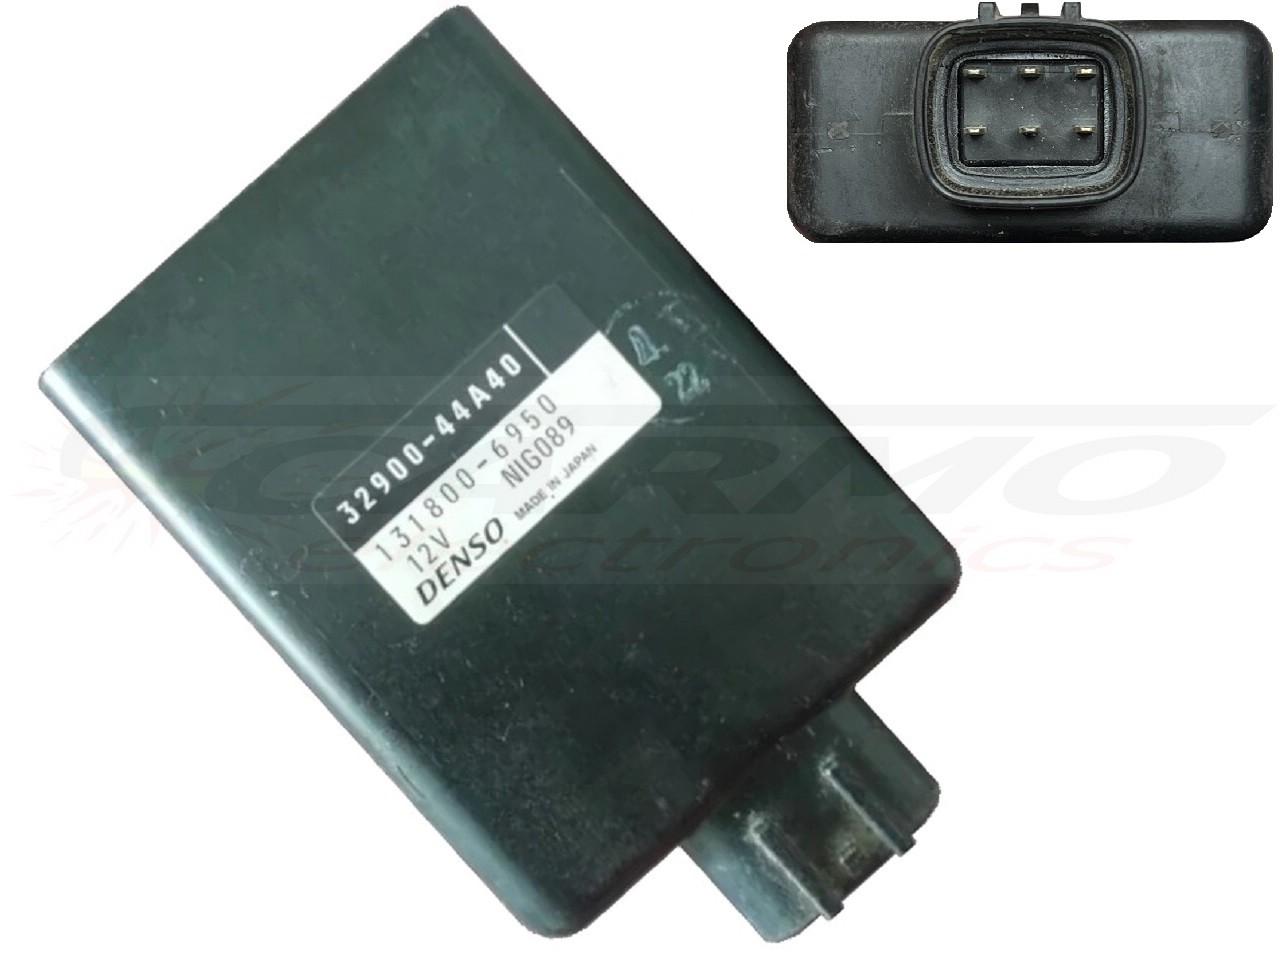 Suzuki DR125 CDI dispositif de commande boîte noire (Denso, 32900-44A40, 131800-6950)